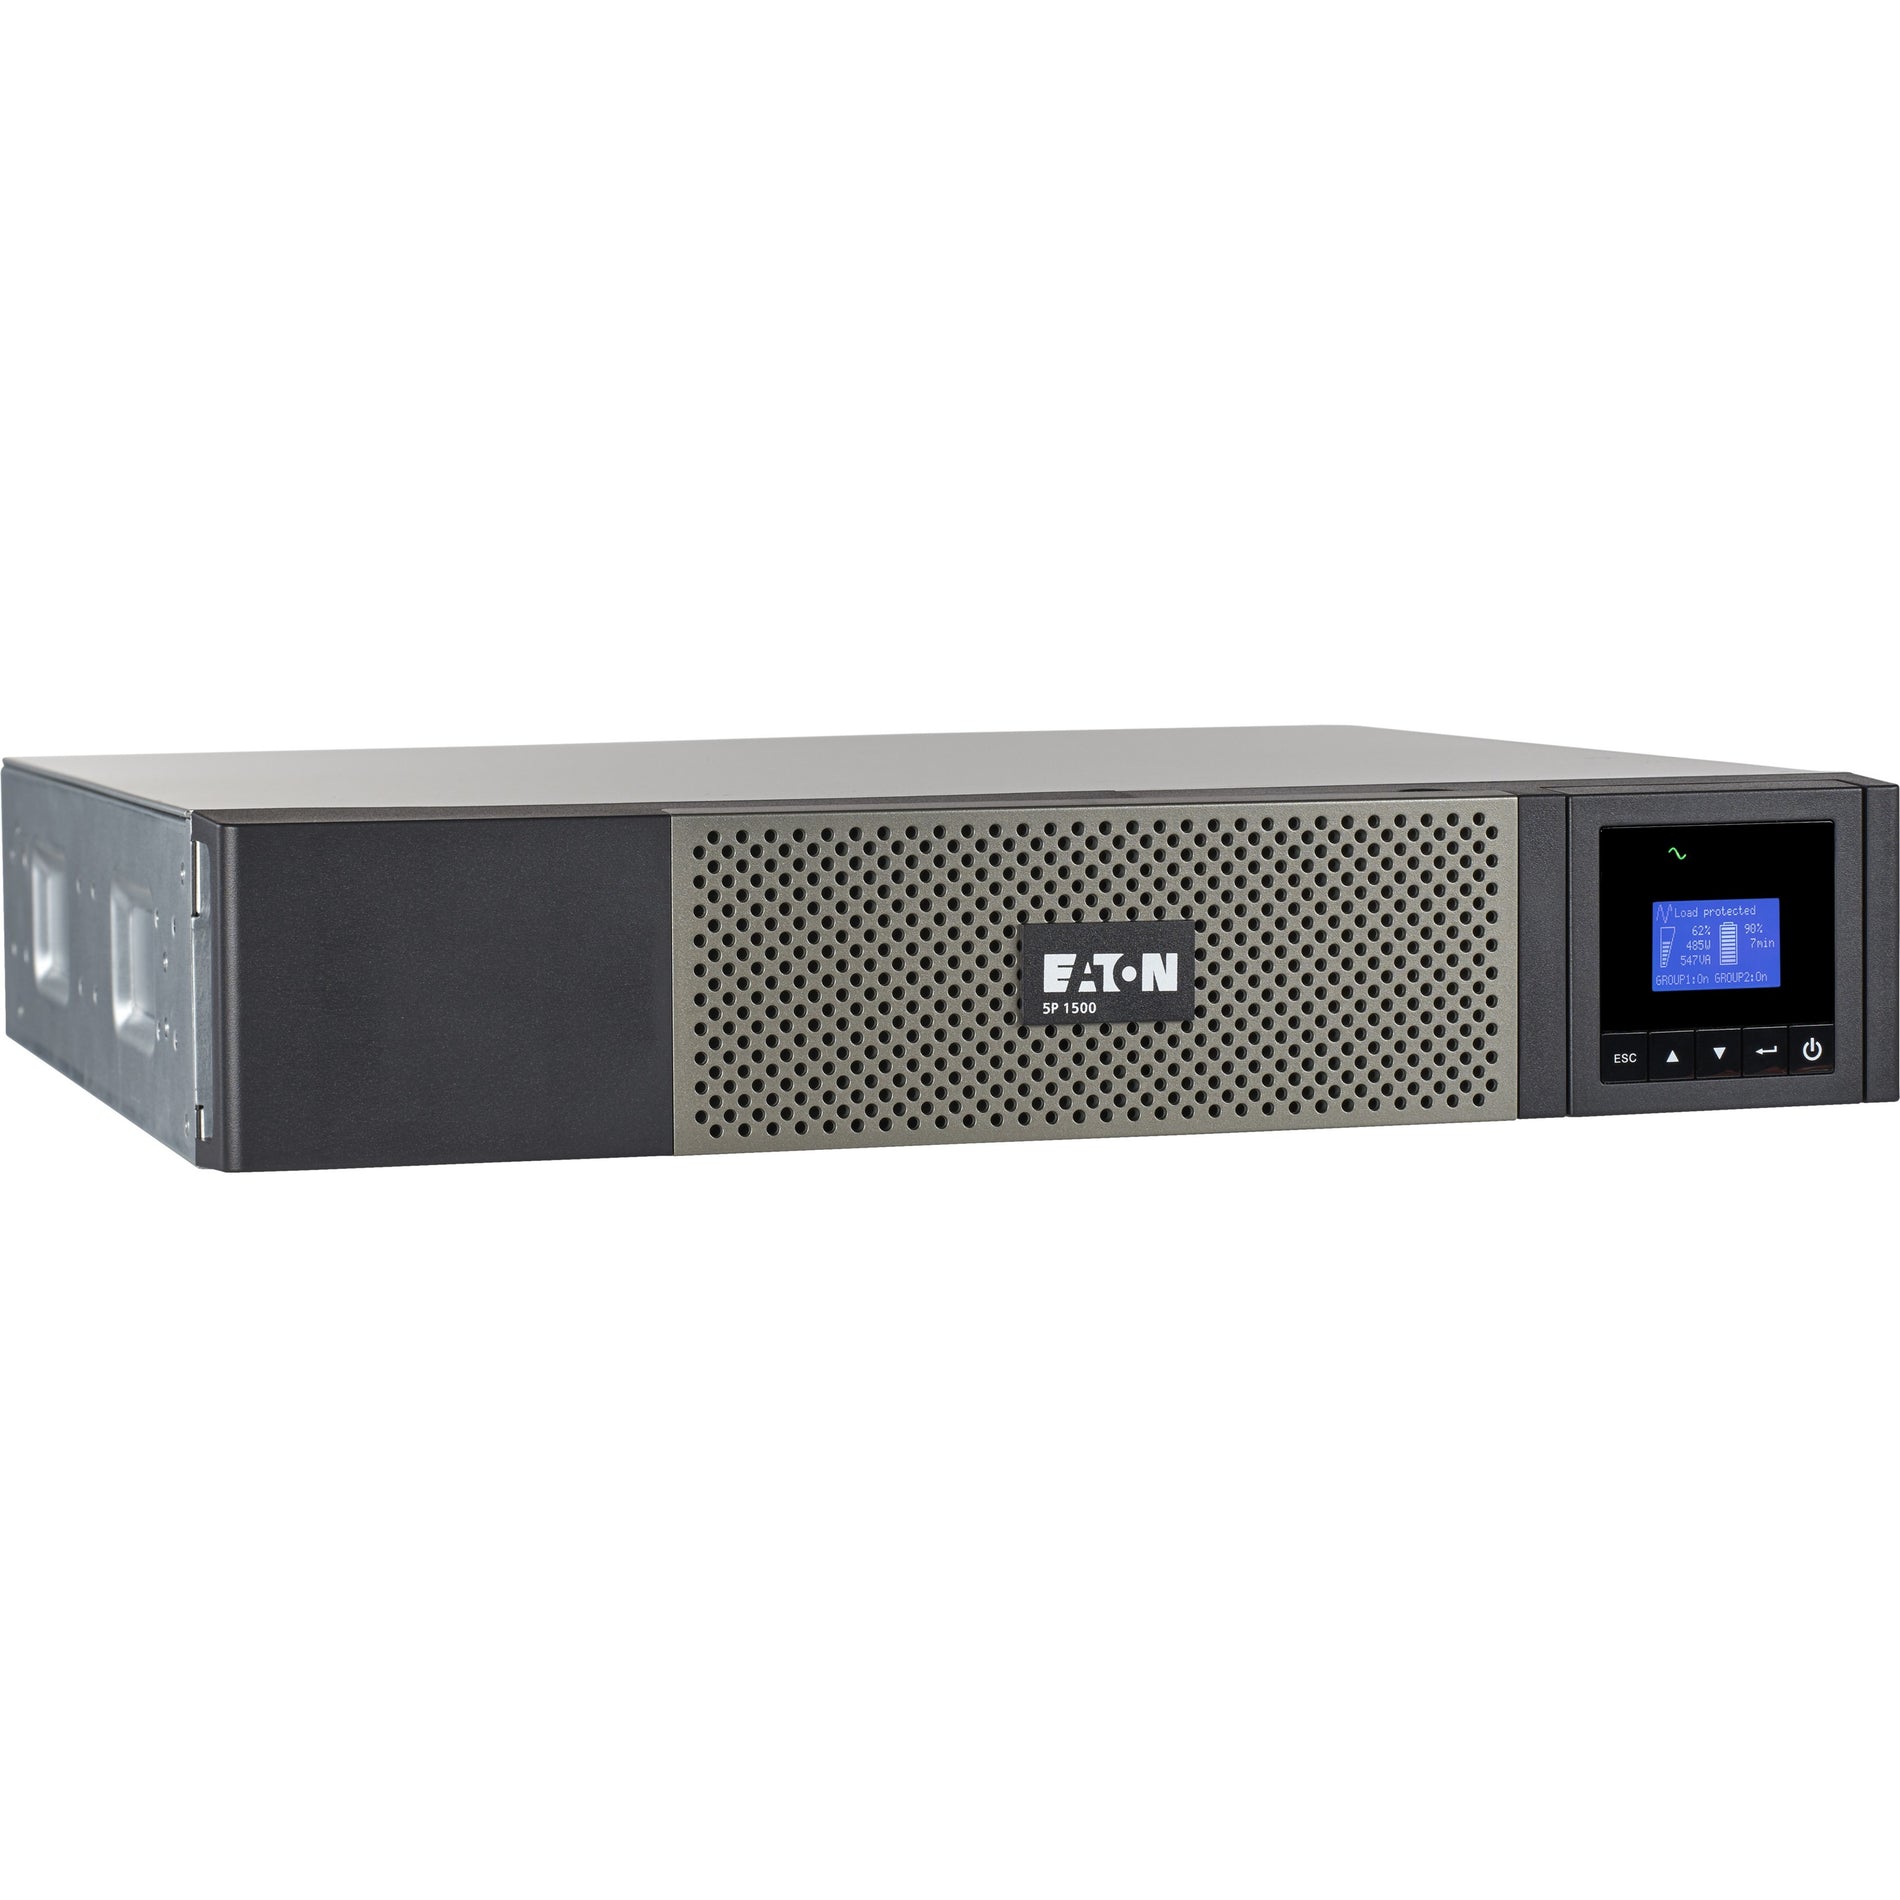 Eaton 5P 5P1500RC 1440VA 1100W 120V Line-Interactive UPS, 10x 5-15R Outlets, 16-Inch Depth, True Sine Wave